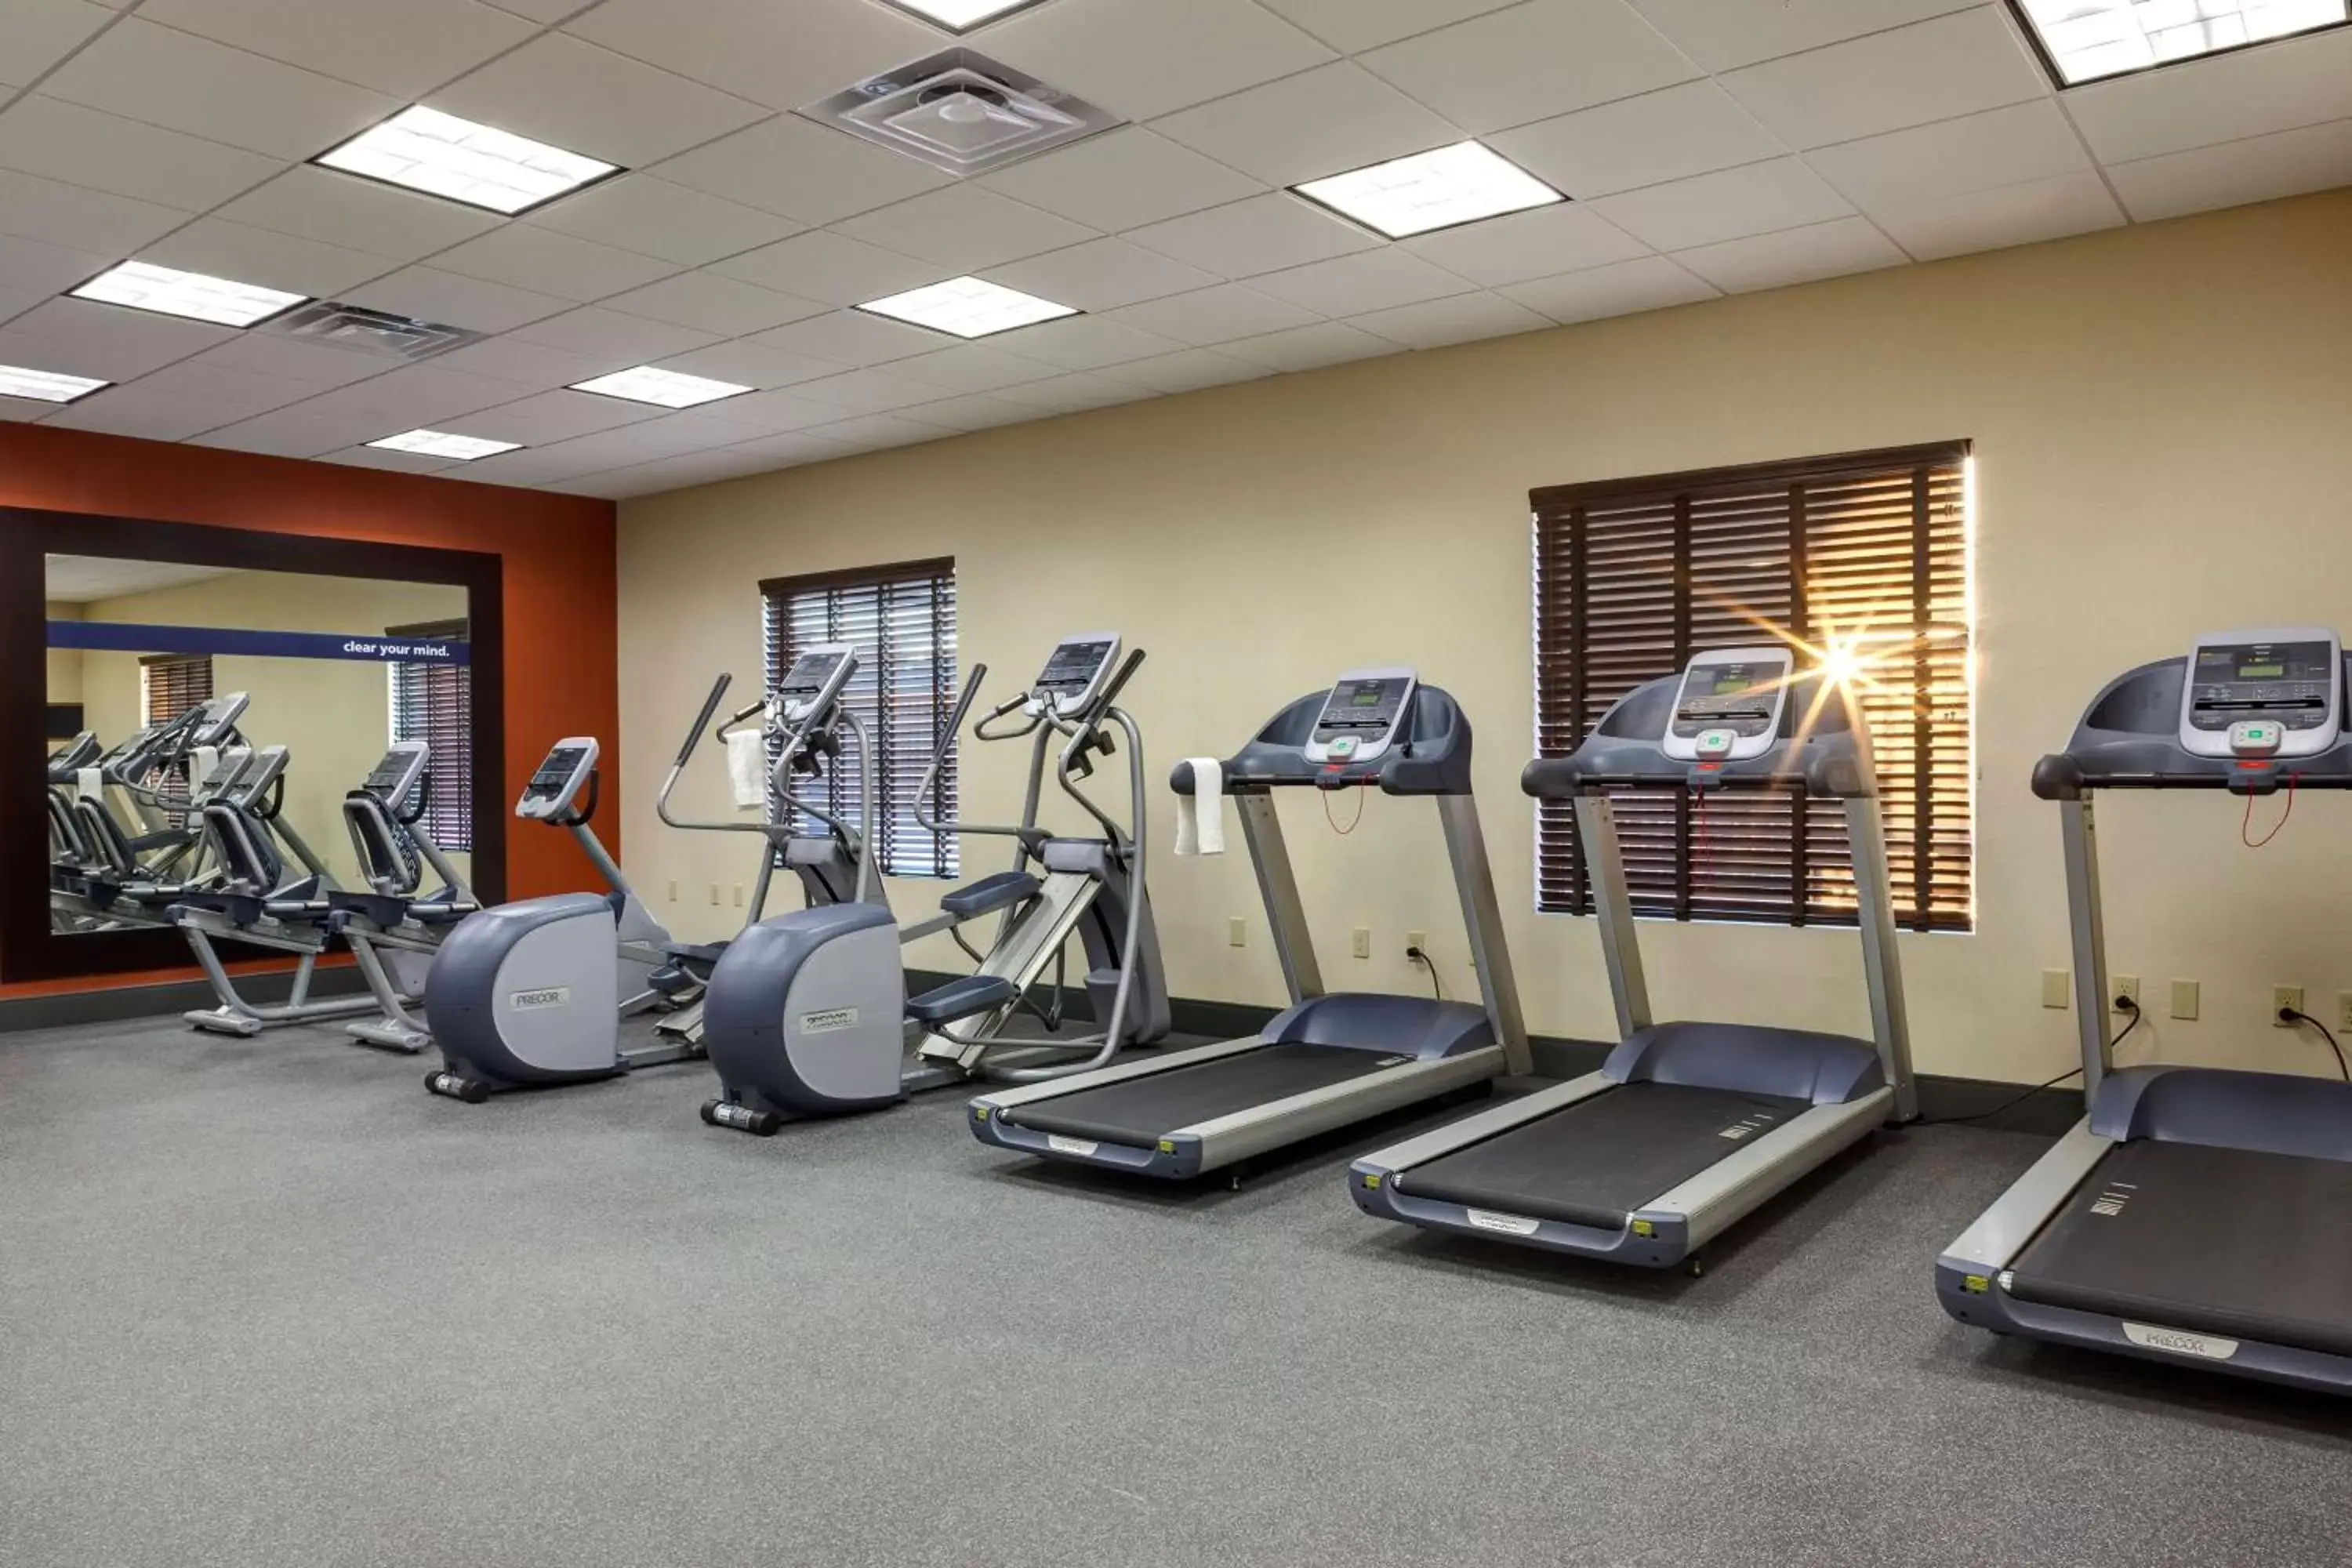 Fitness centre/facilities, Fitness Center/Facilities in Hampton Inn & Suites Blythe, CA